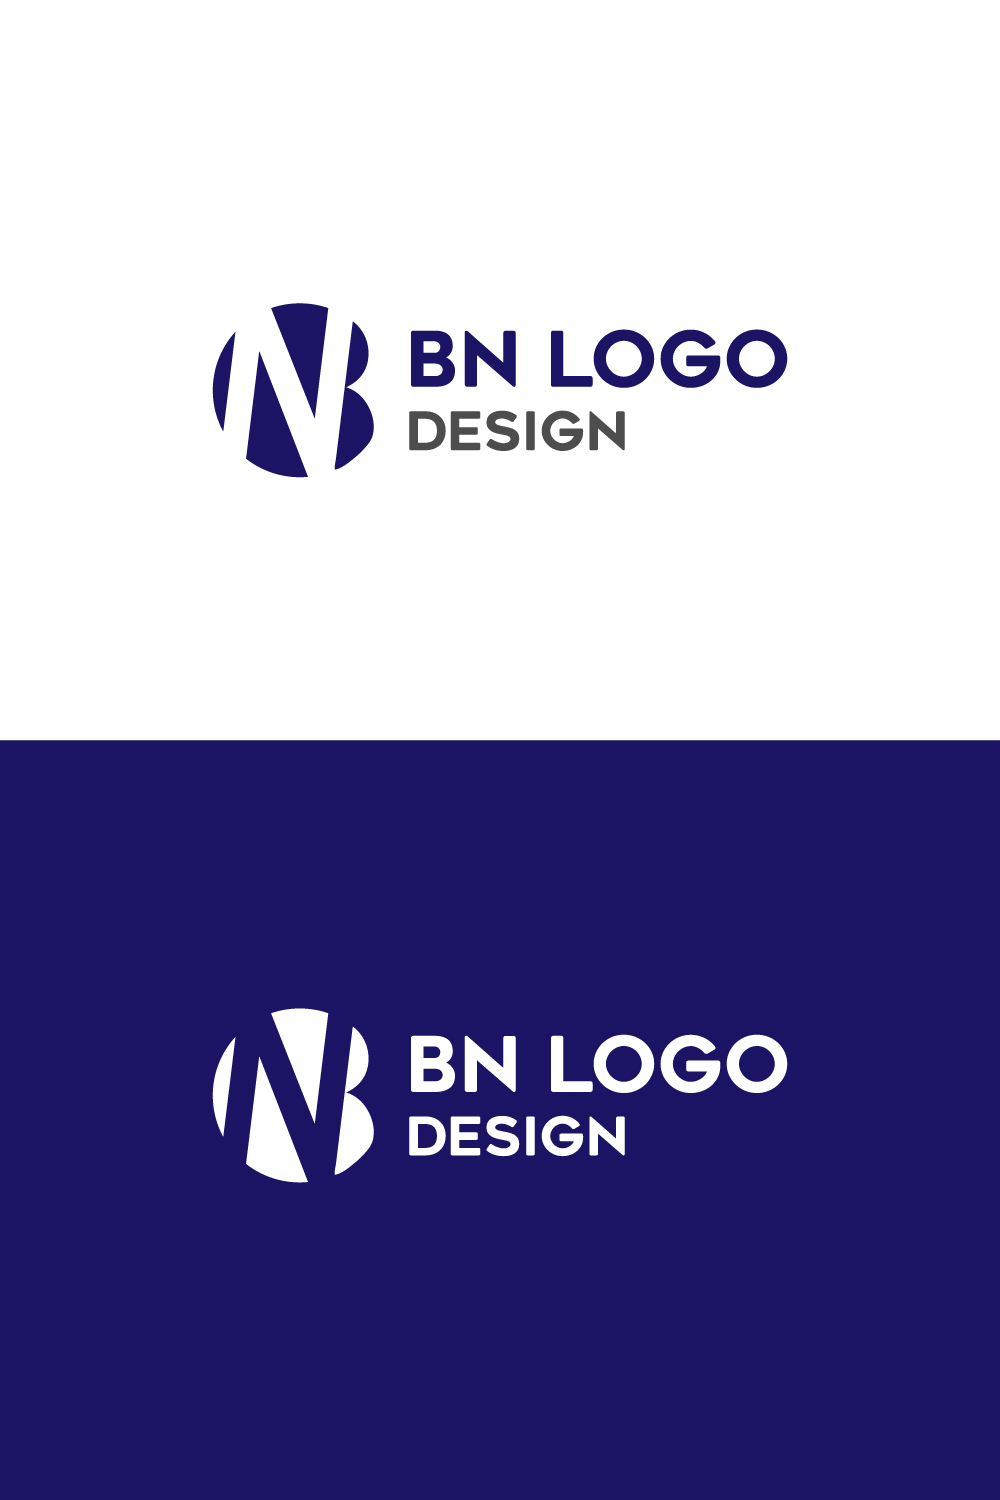 BN logo pinterest preview image.